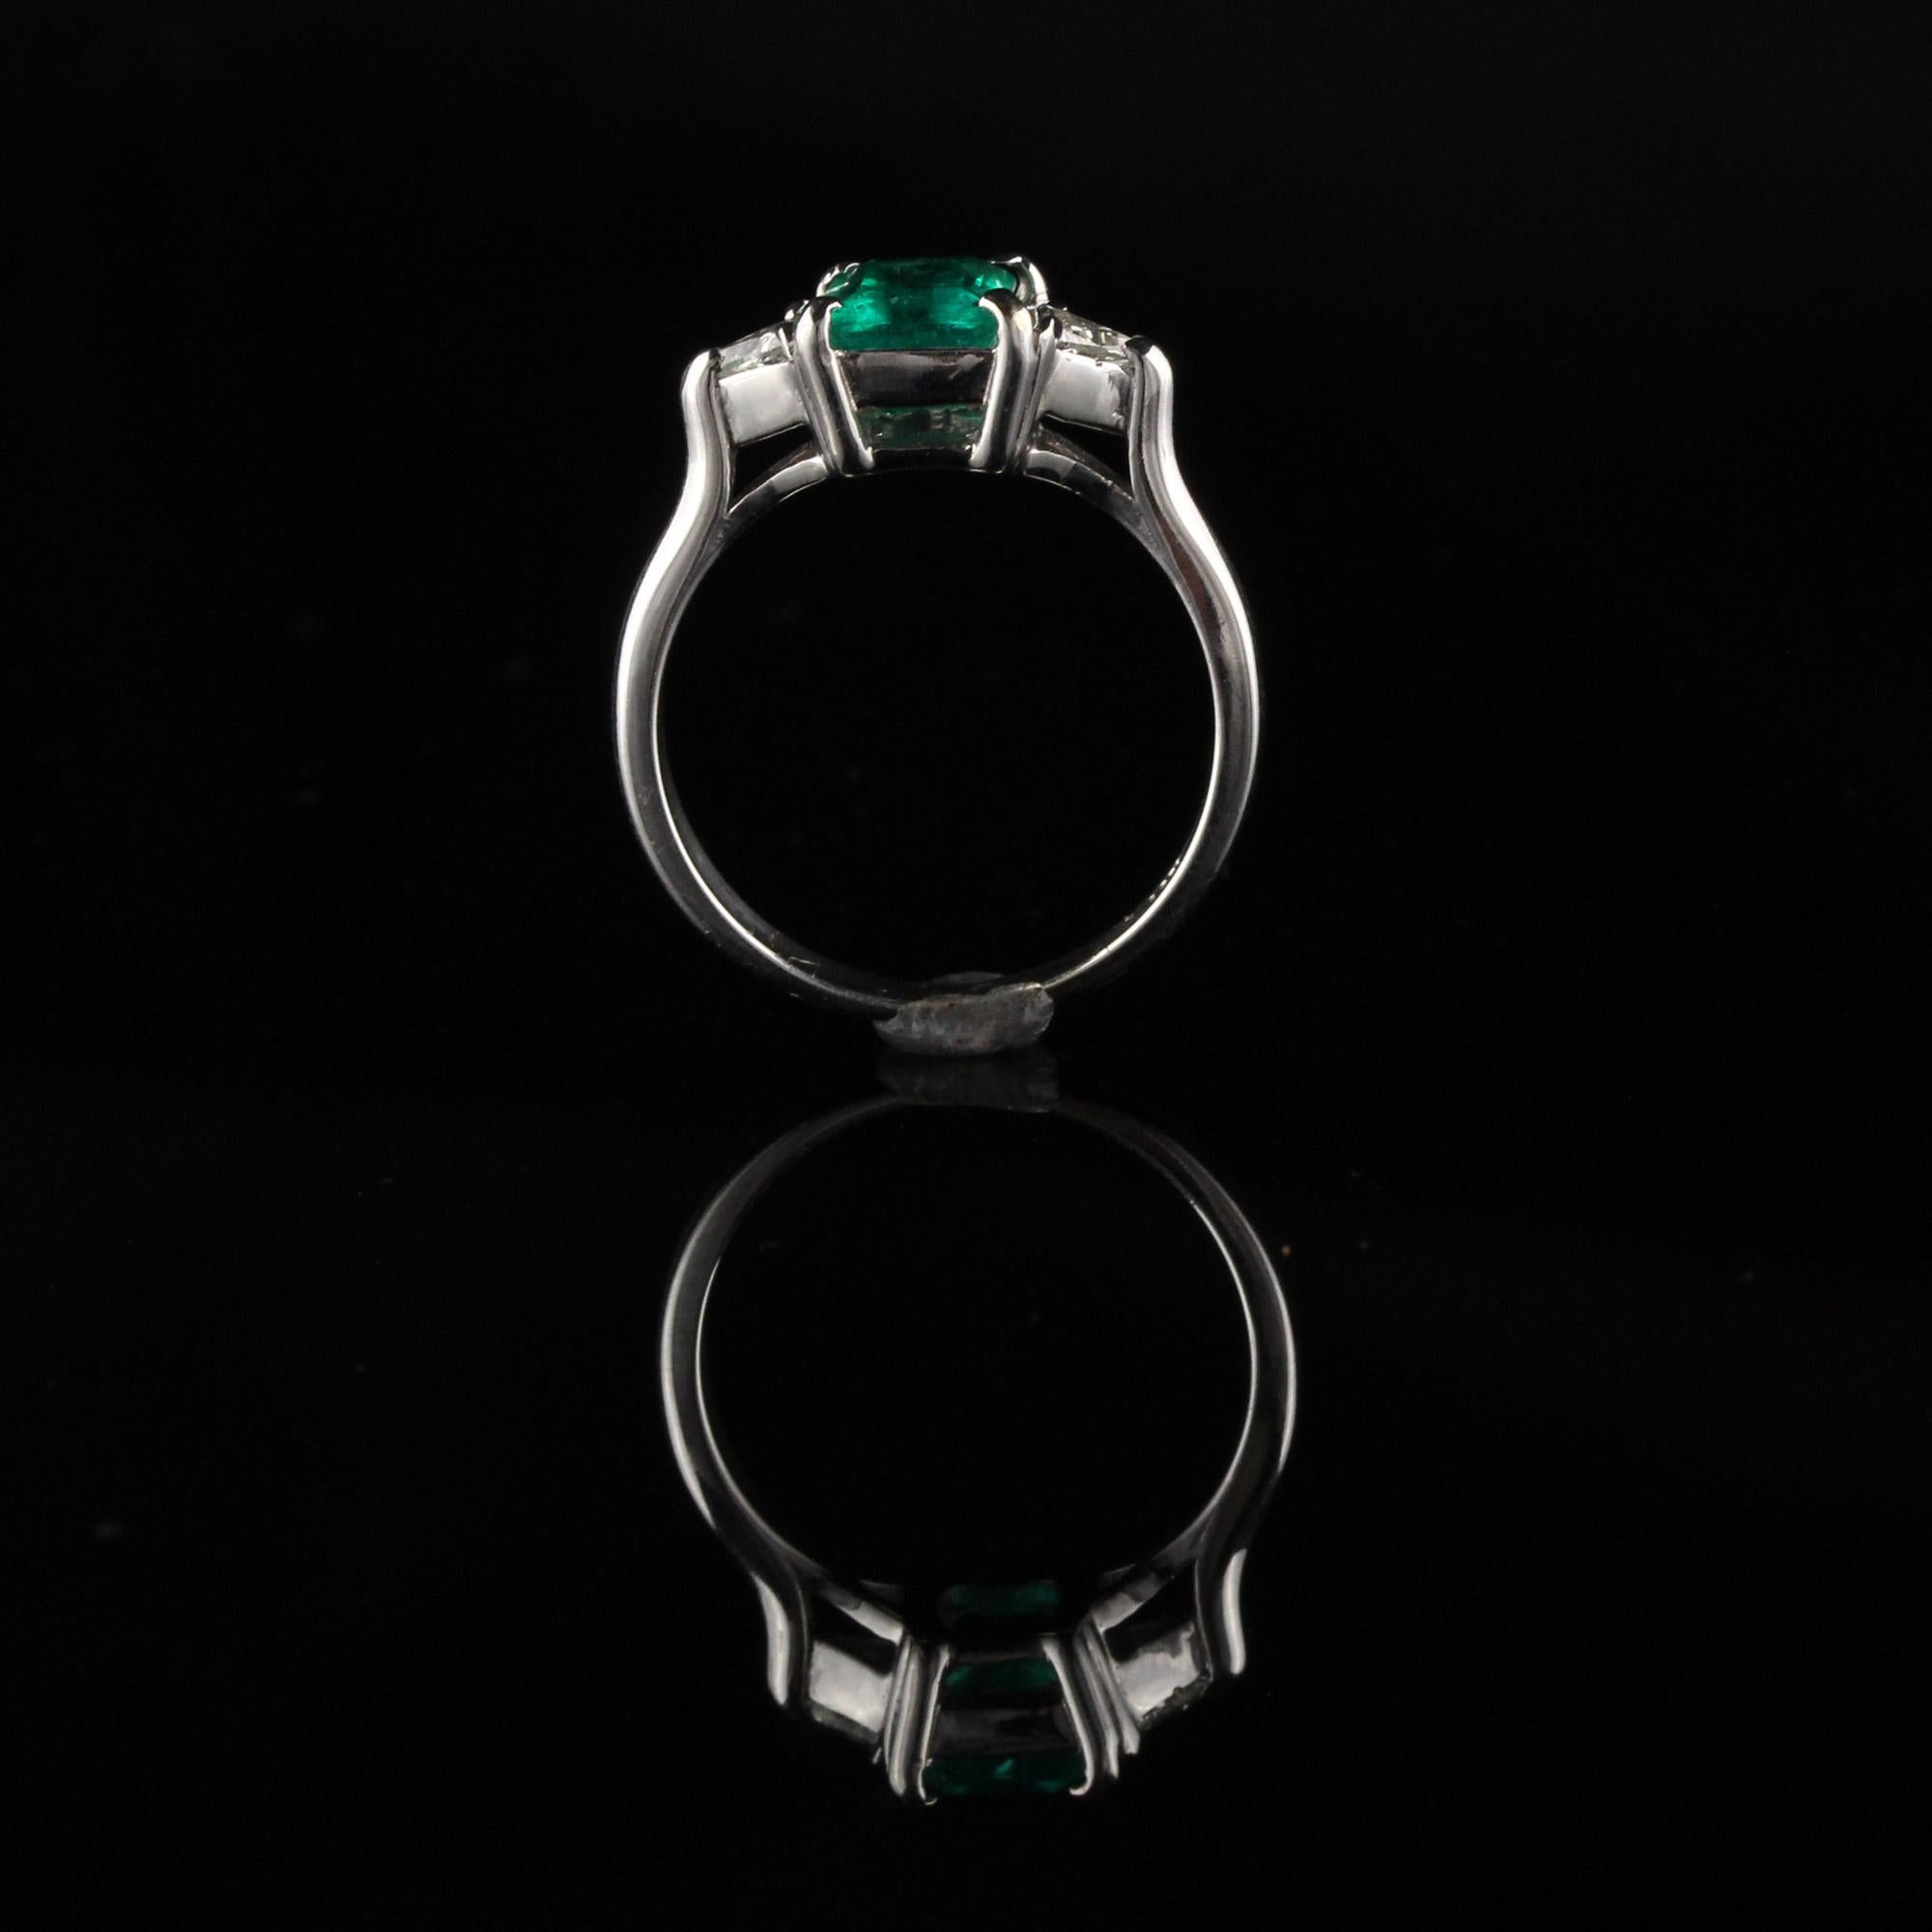 vintage emerald ring white gold